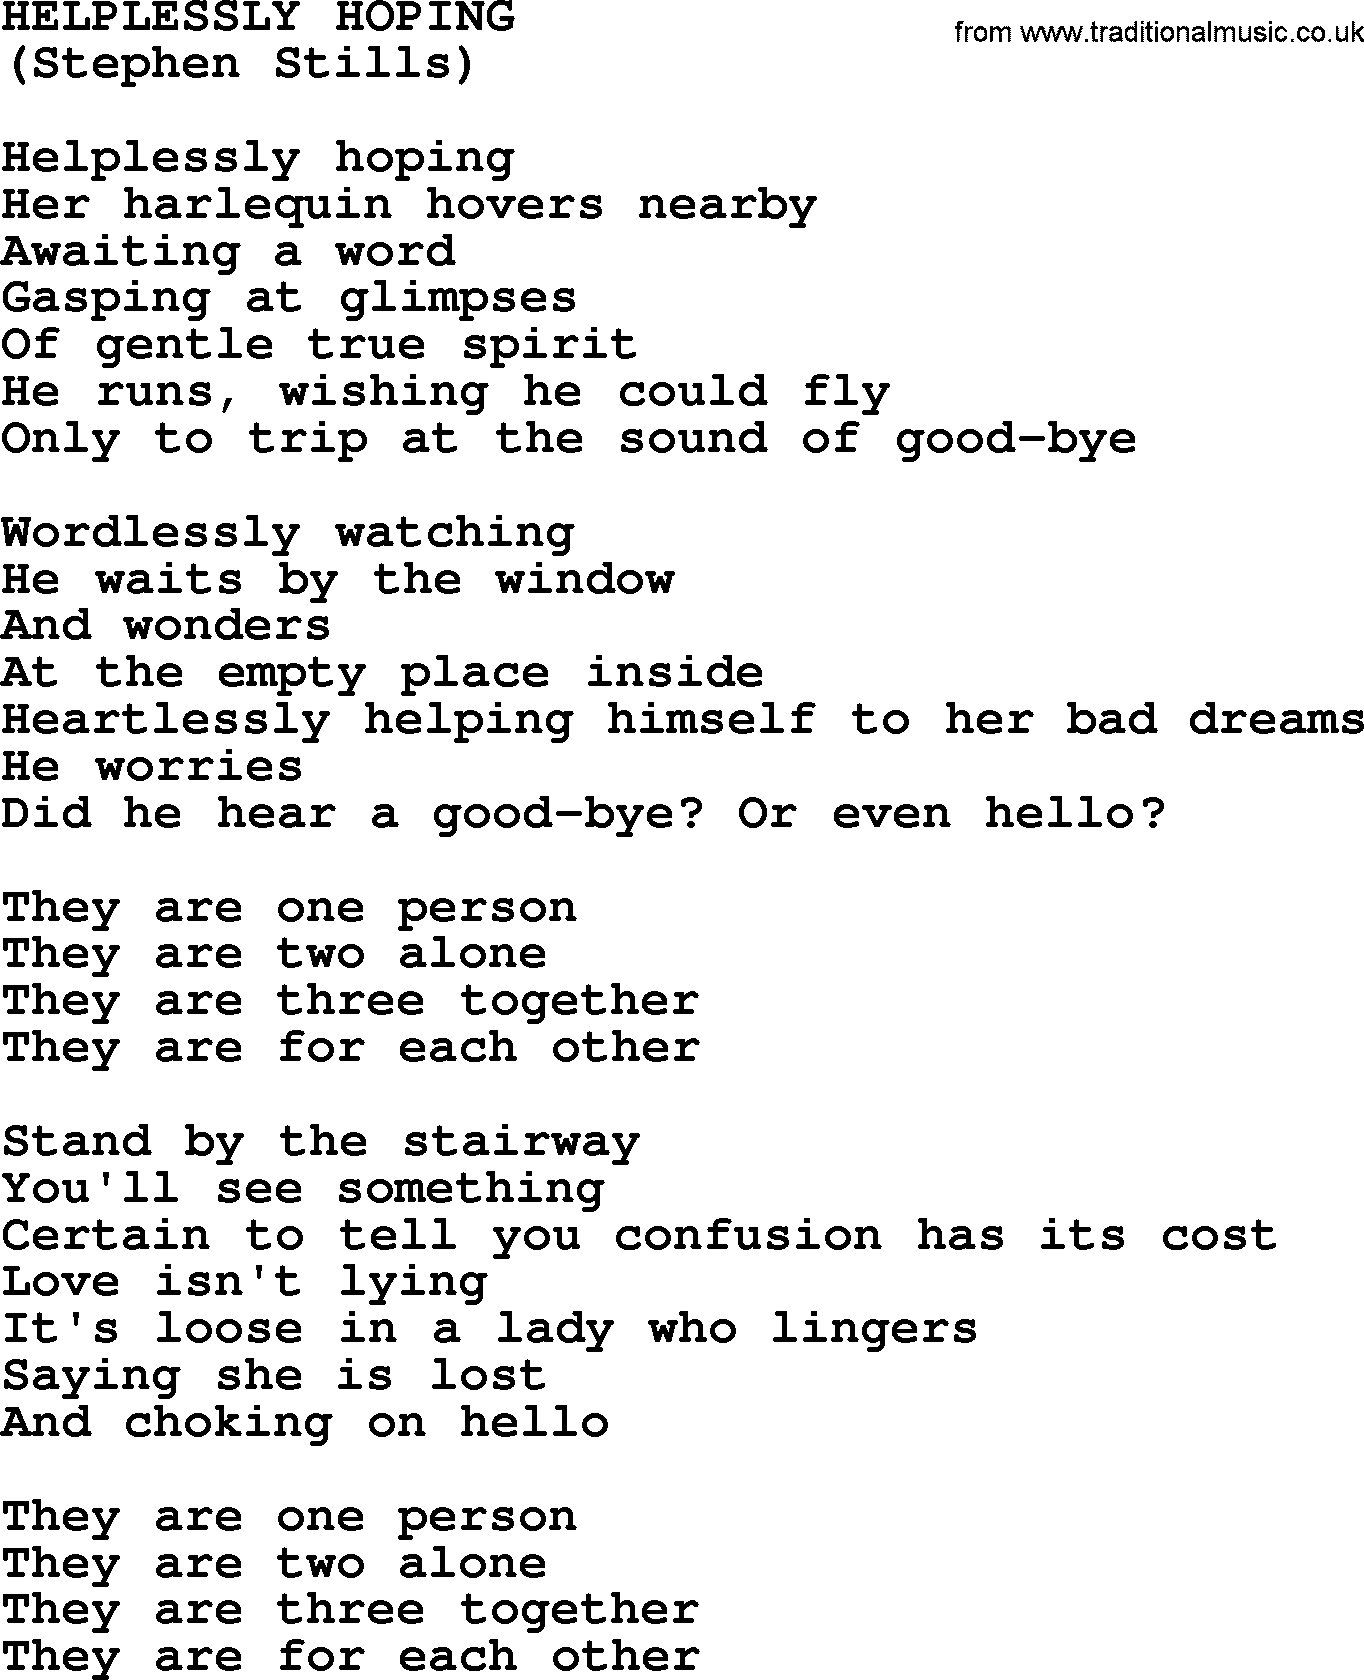 The Byrds song Helplessly Hoping, lyrics